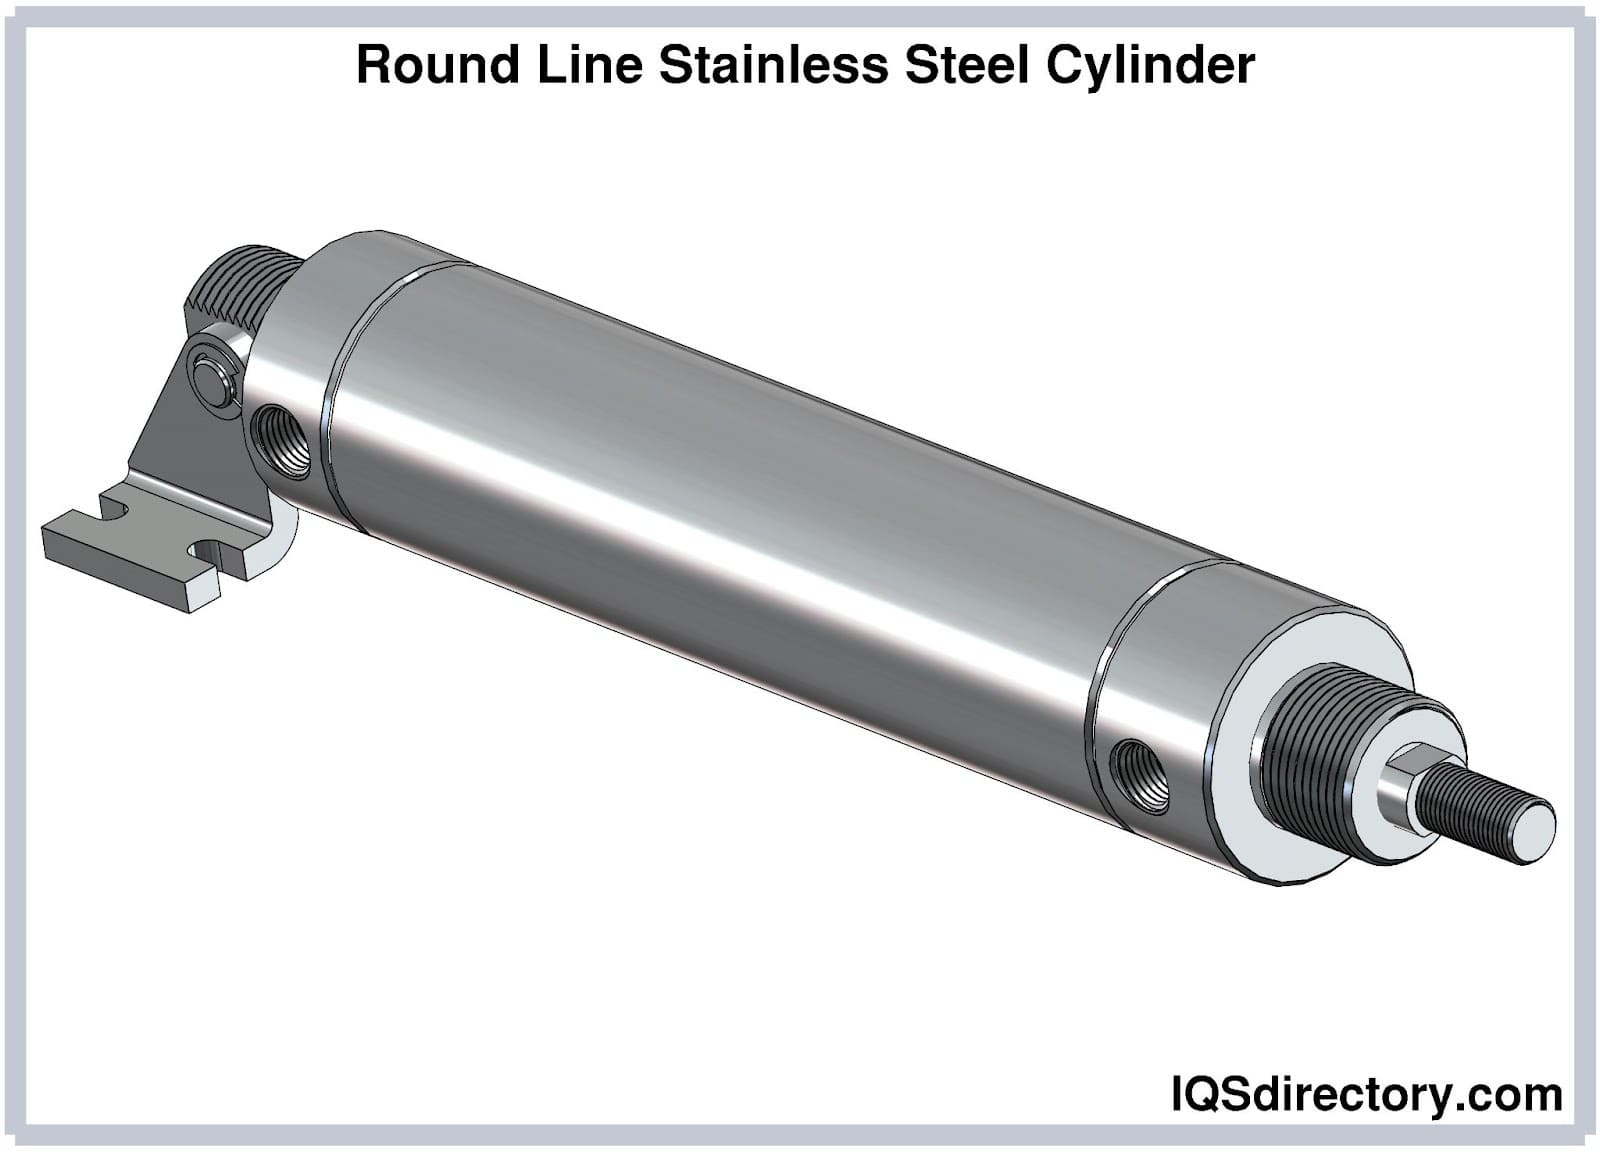 Round Line Stainless Steel Cylinder